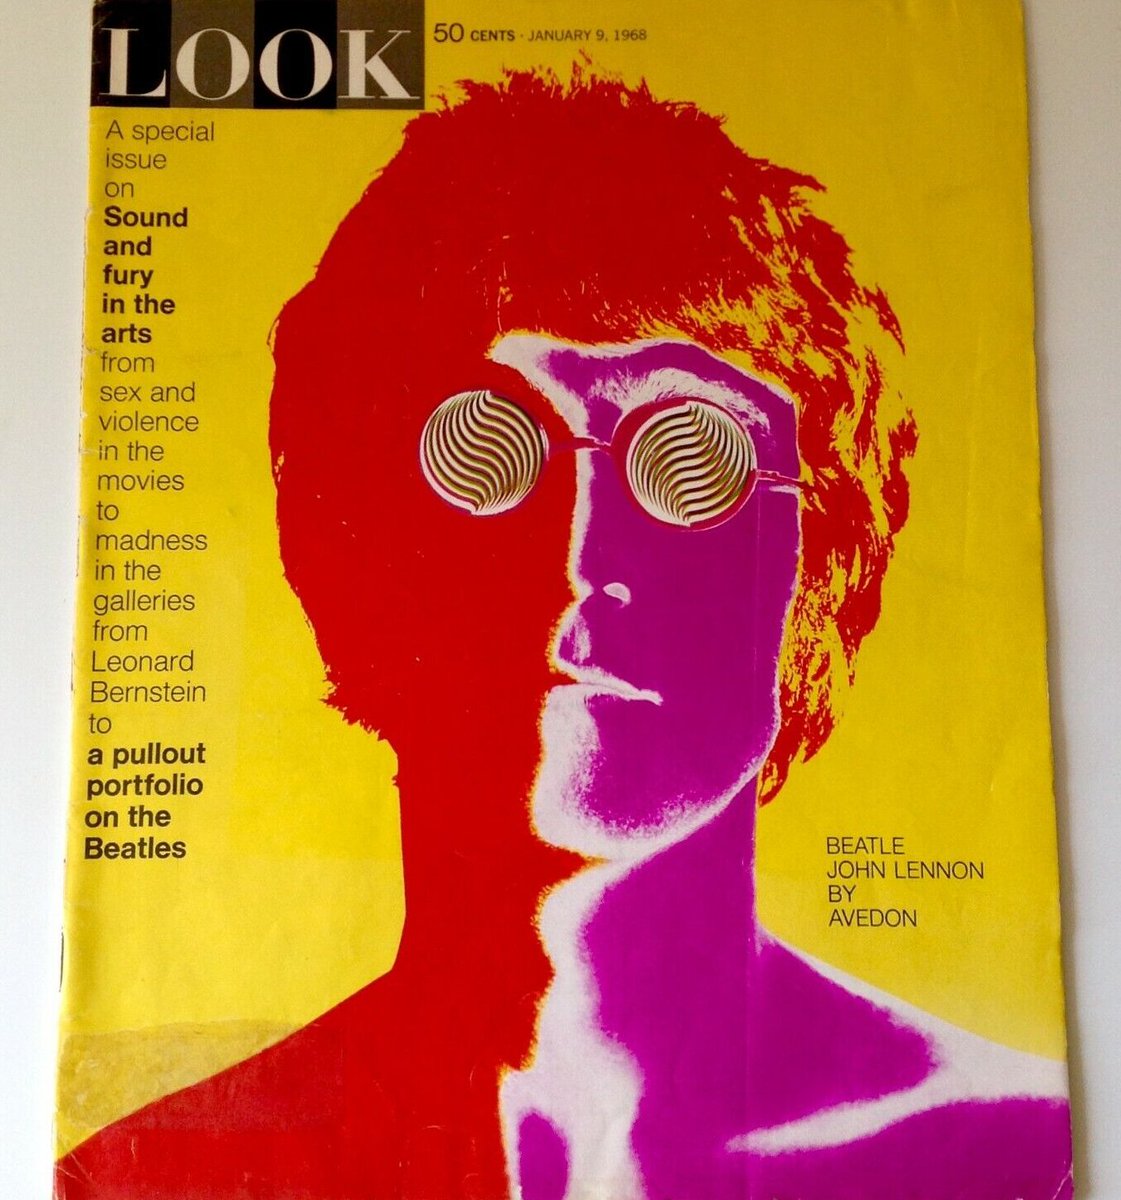 43 Years Ago Today

❤️#JohnLennon ❤️ 

raygunbooksprints.etsy.com

Ph: #RichardAvedon  #LookMagazine        

#TheBeatles #LennonAndMcCartney